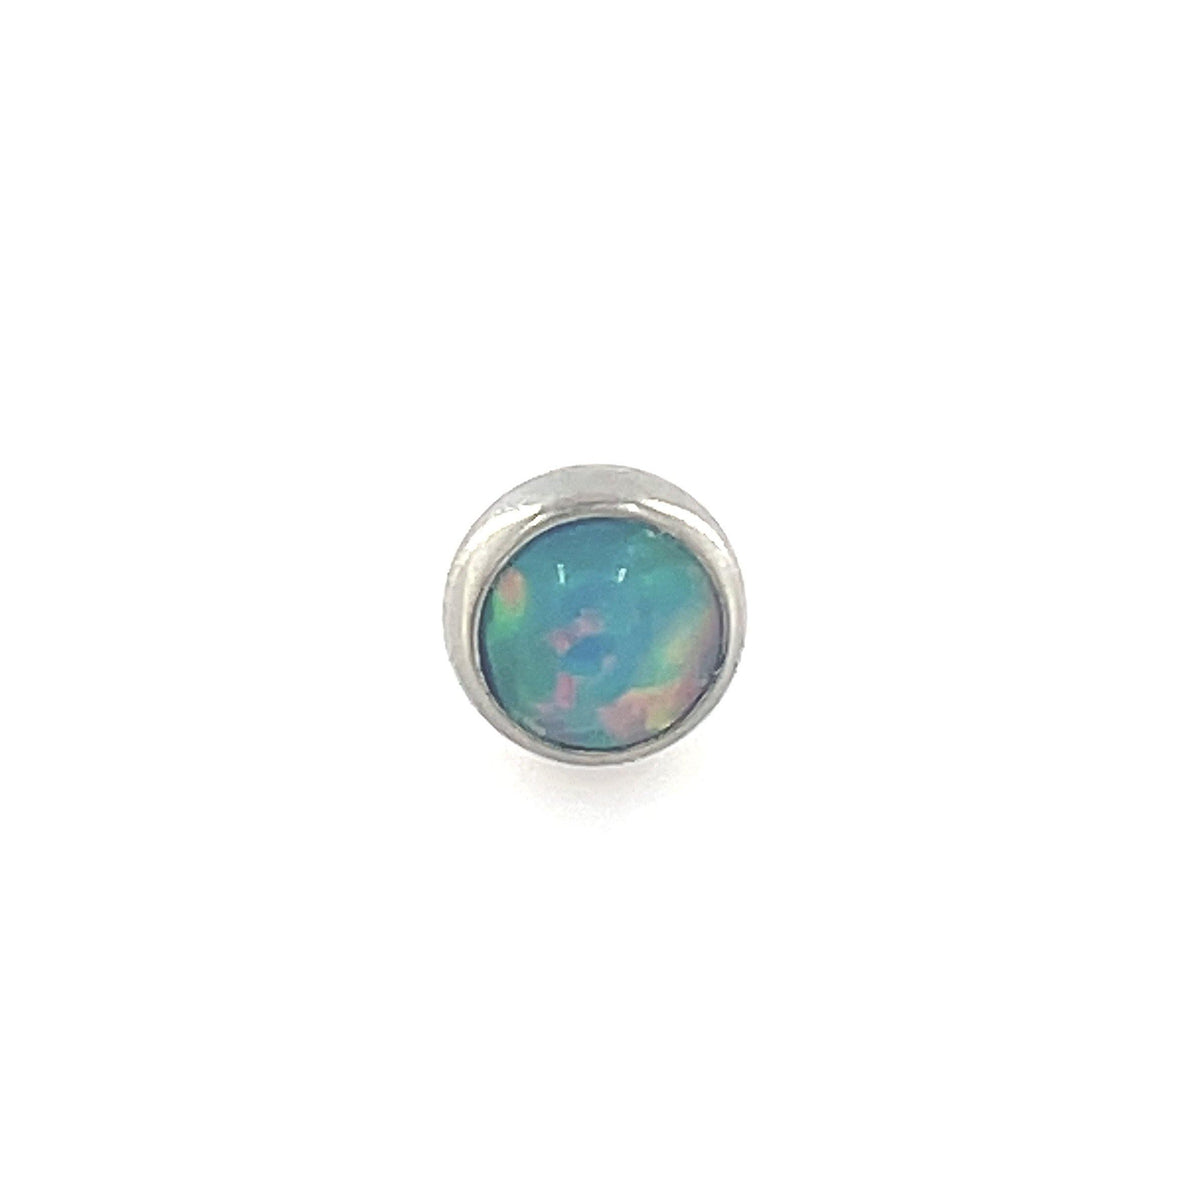 Industrial Strength Titanium Teal Opal Cabochon Gem End - Isha Body Jewellery